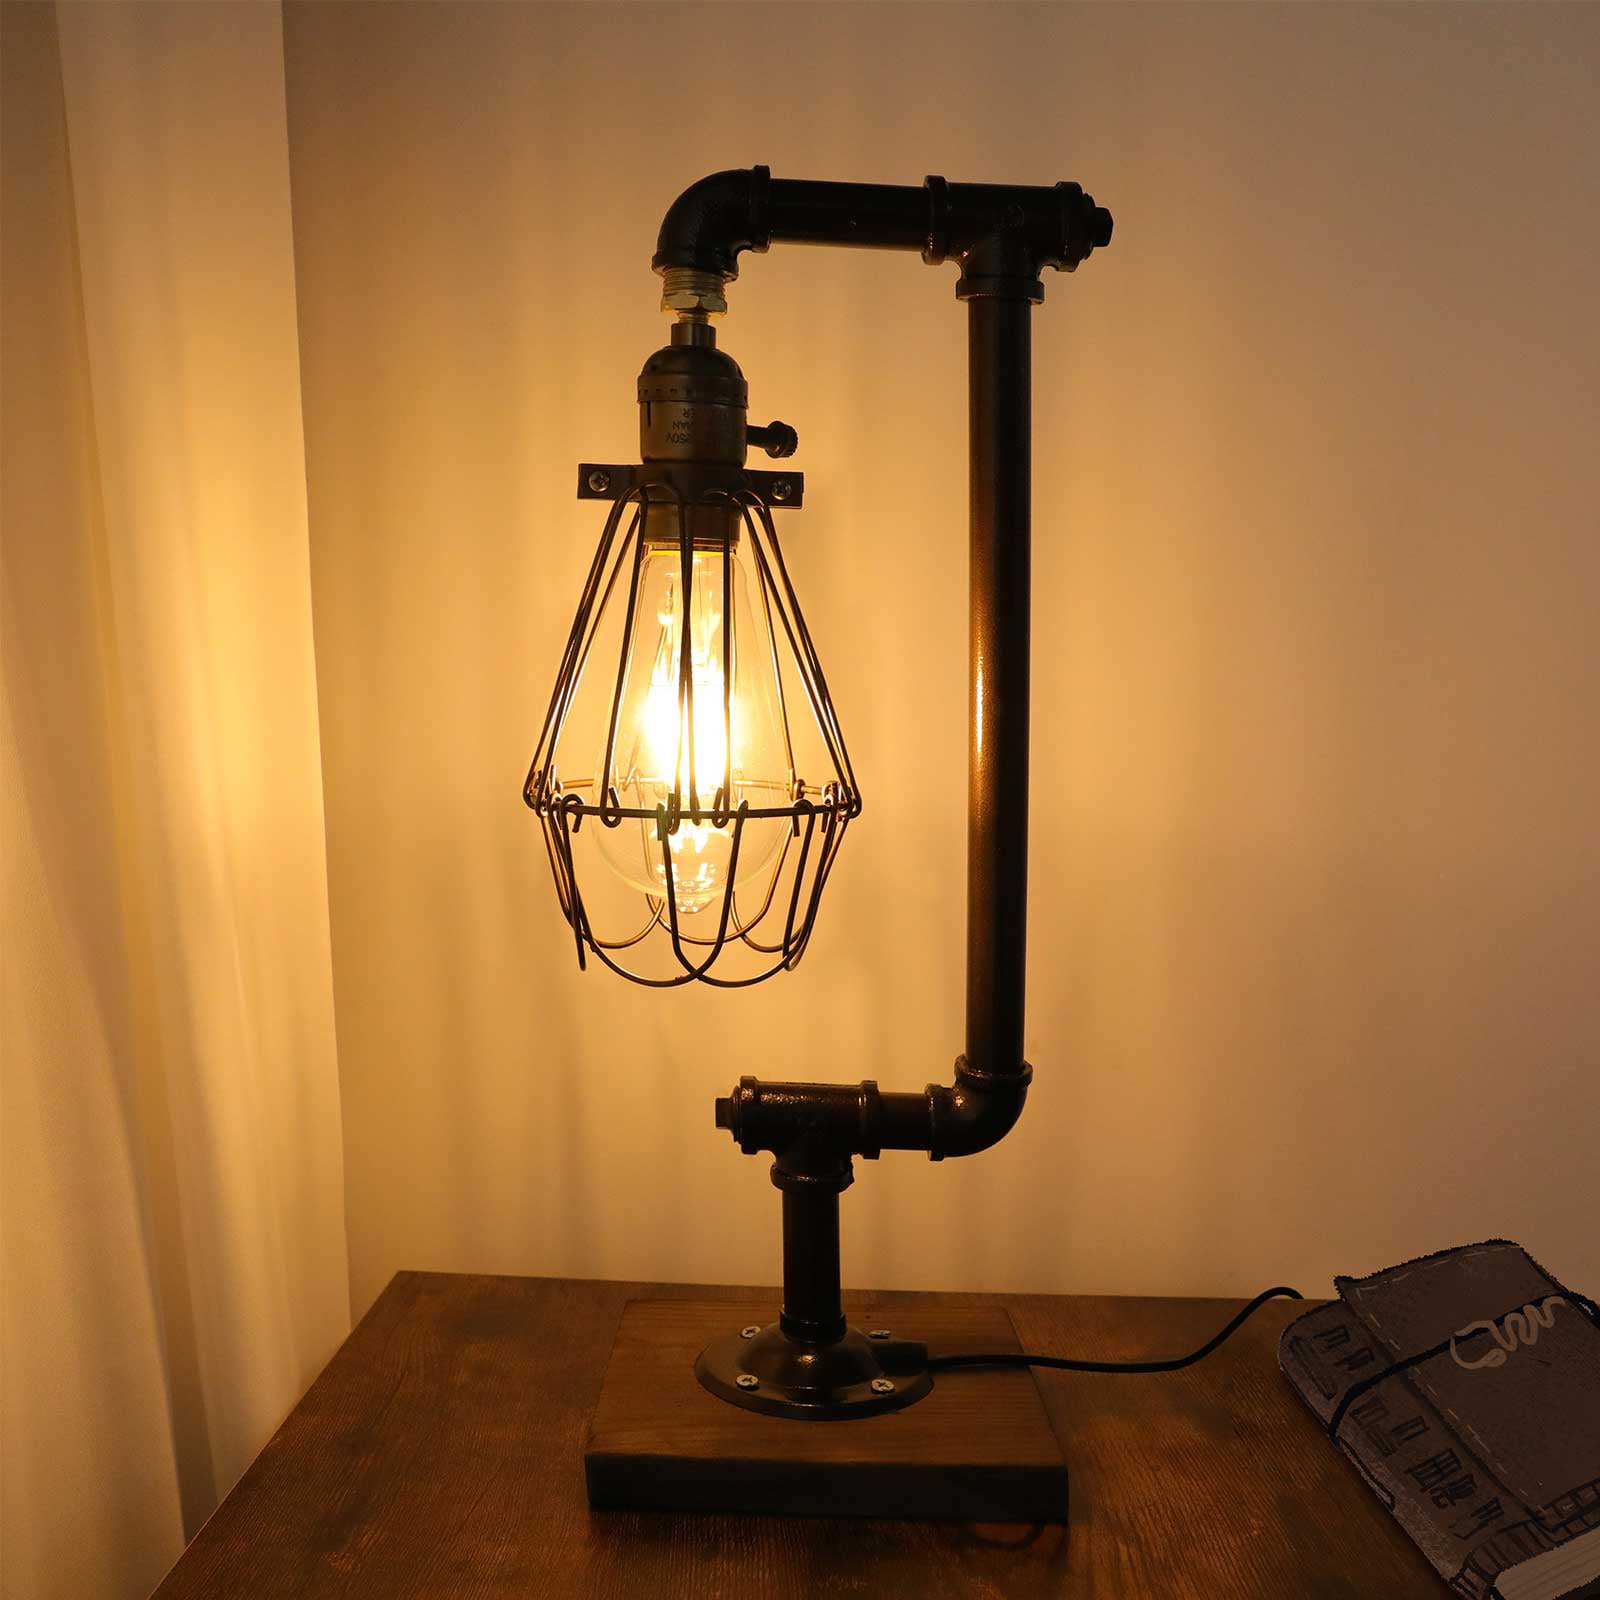 Bronze Vintage Industrial Explosion Proof "Touch" Desk Lamp Steampunk Light 